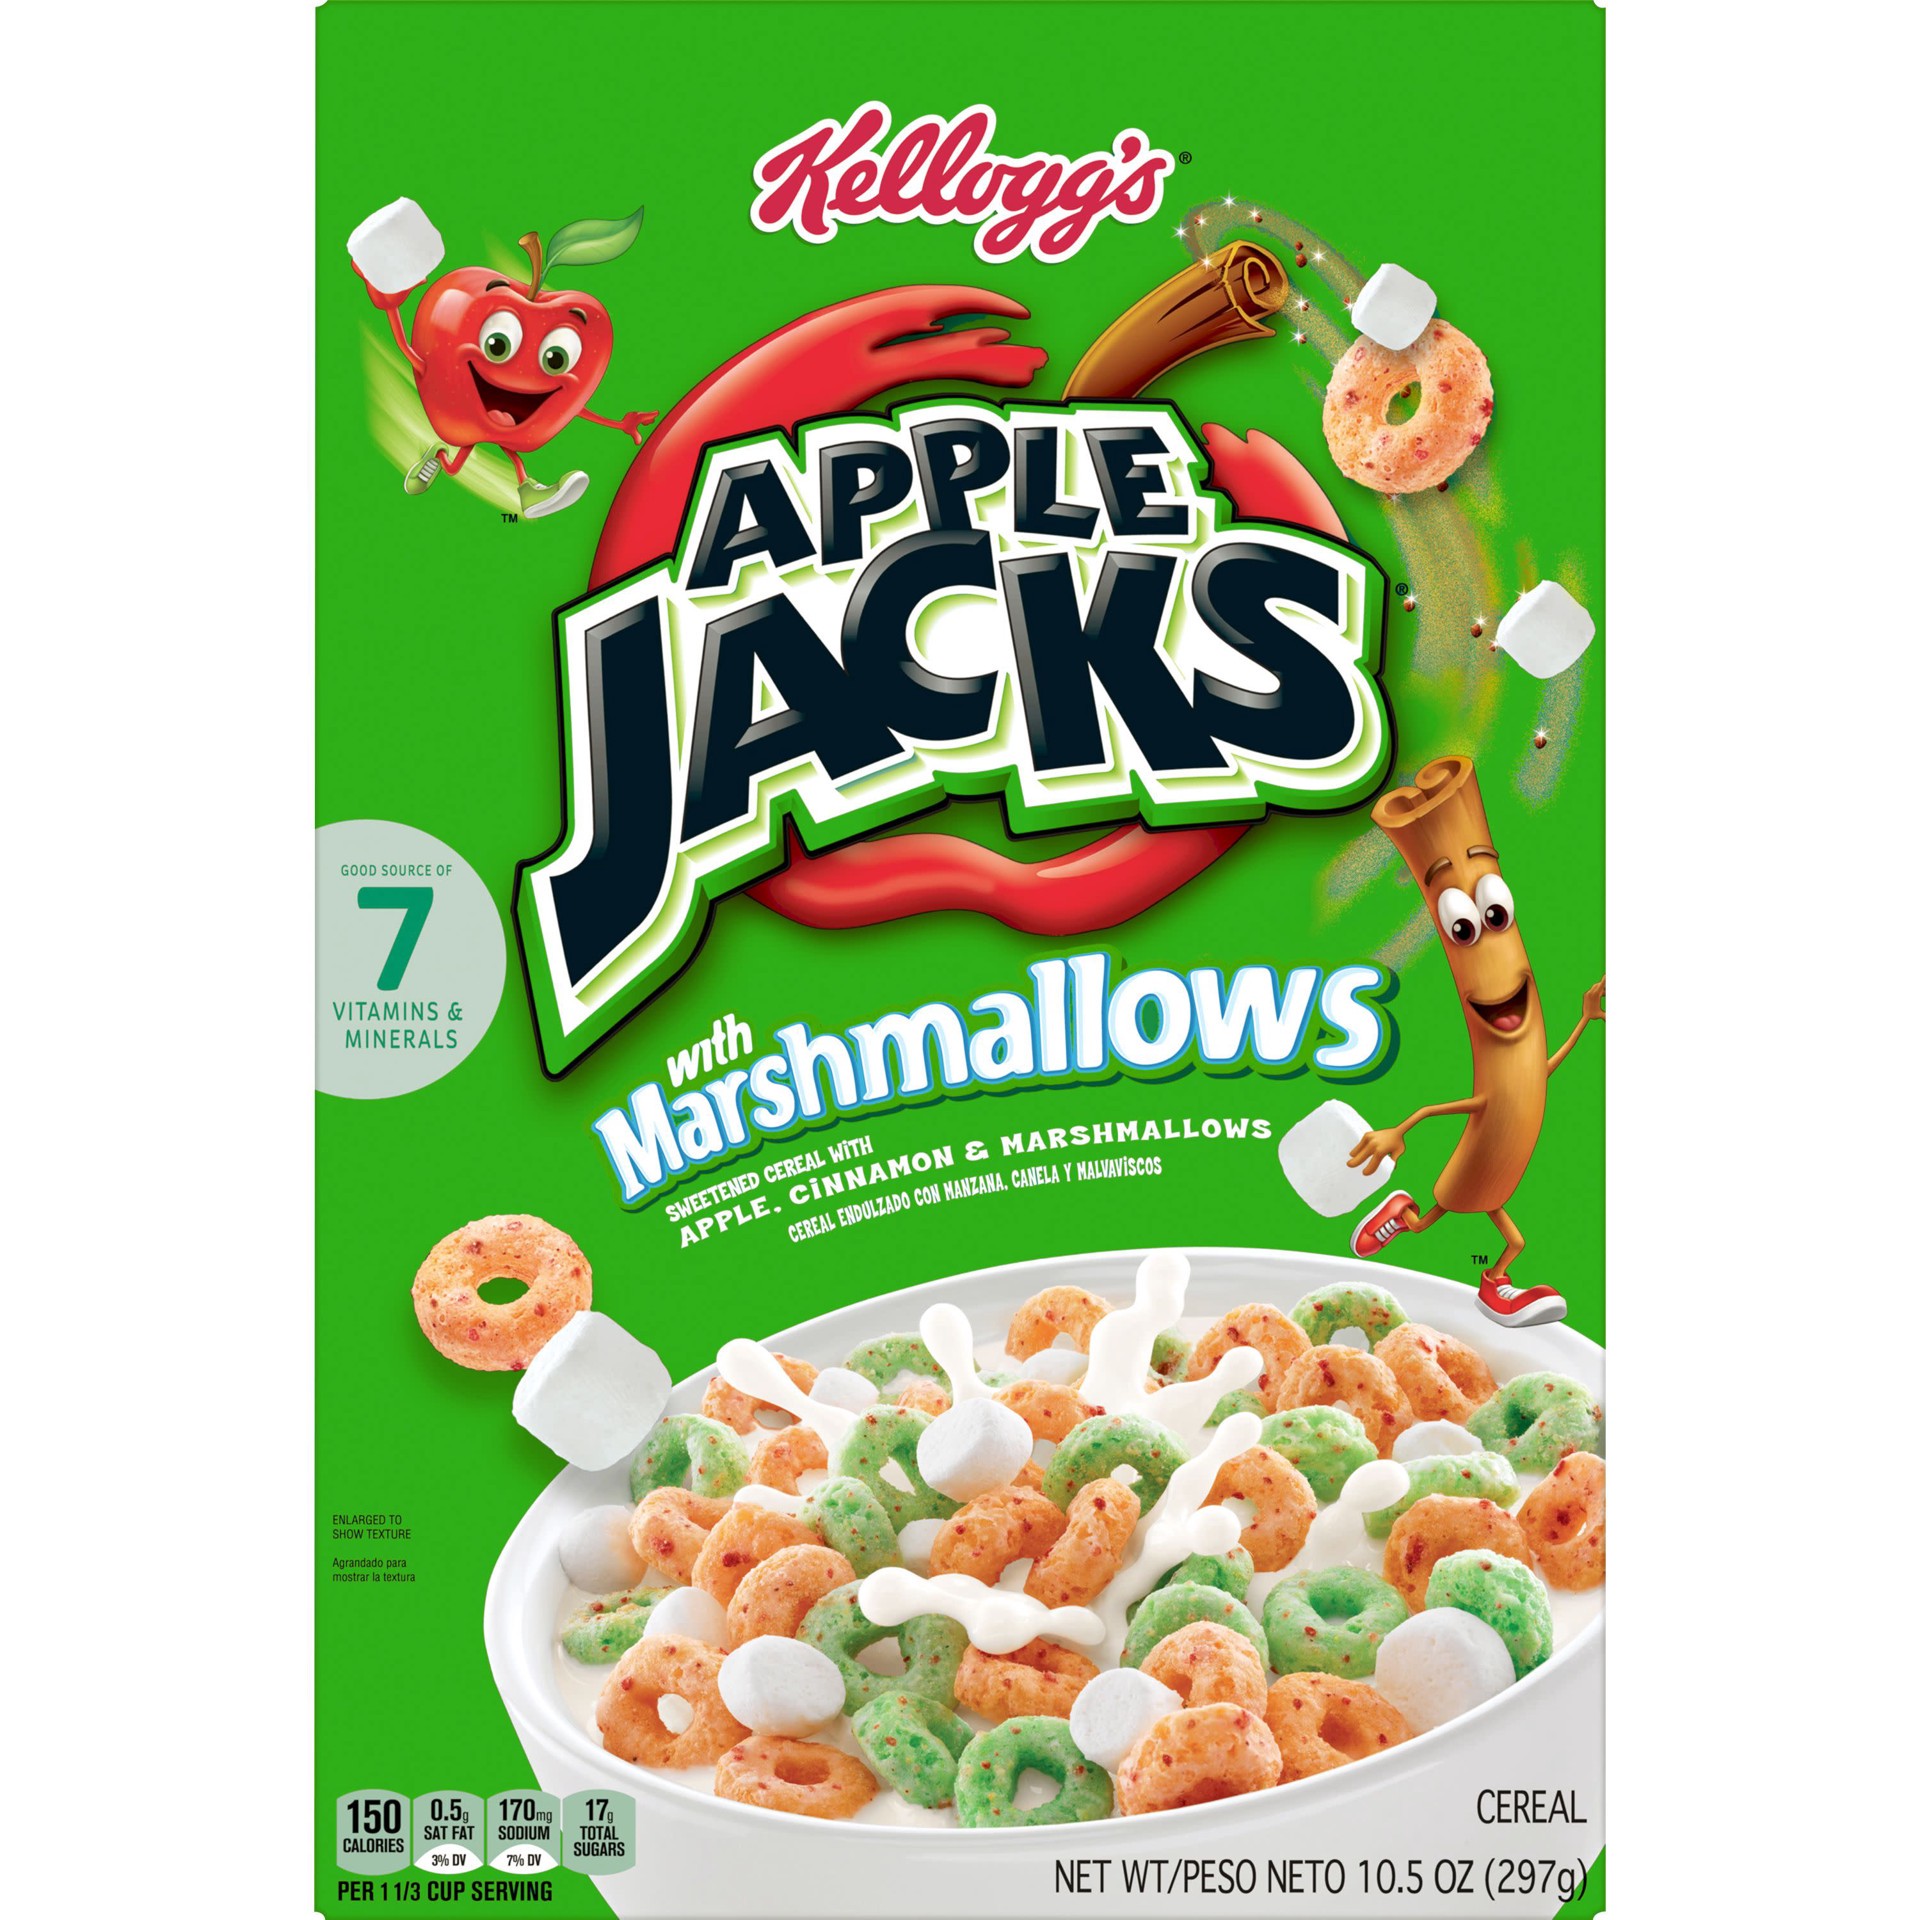 slide 2 of 5, Apple Jacks Kellogg's Apple Jacks Breakfast Cereal, 7 Vitamins and Minerals, Kids Snacks, Original with Marshmallows, 10.5oz Box, 10.5 oz